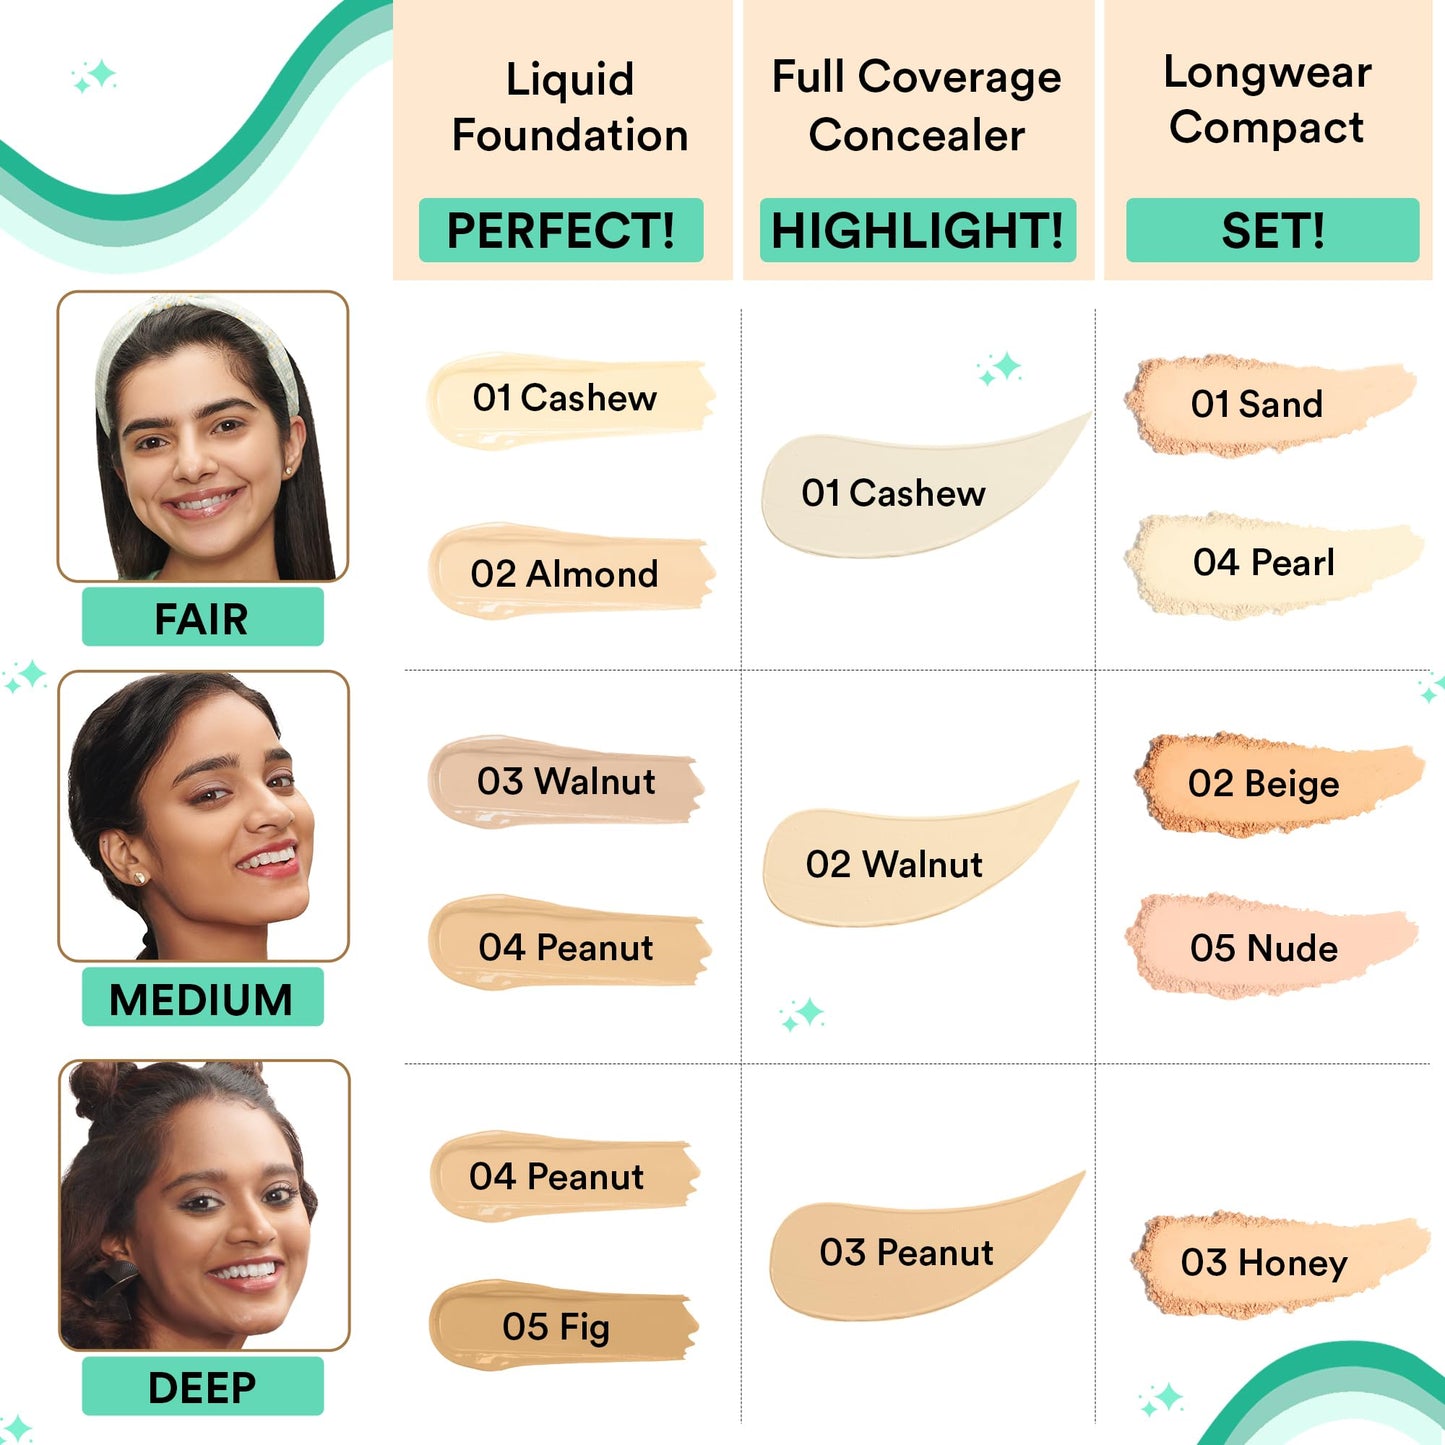 SUGAR POP Longwear Compact – 01 Sand for Fair to Medium Skin Tone | Vitamin E Enriched | UV Protection, Pore Minimizing l Medium Coverage | Face Compact for Women l 9 gm